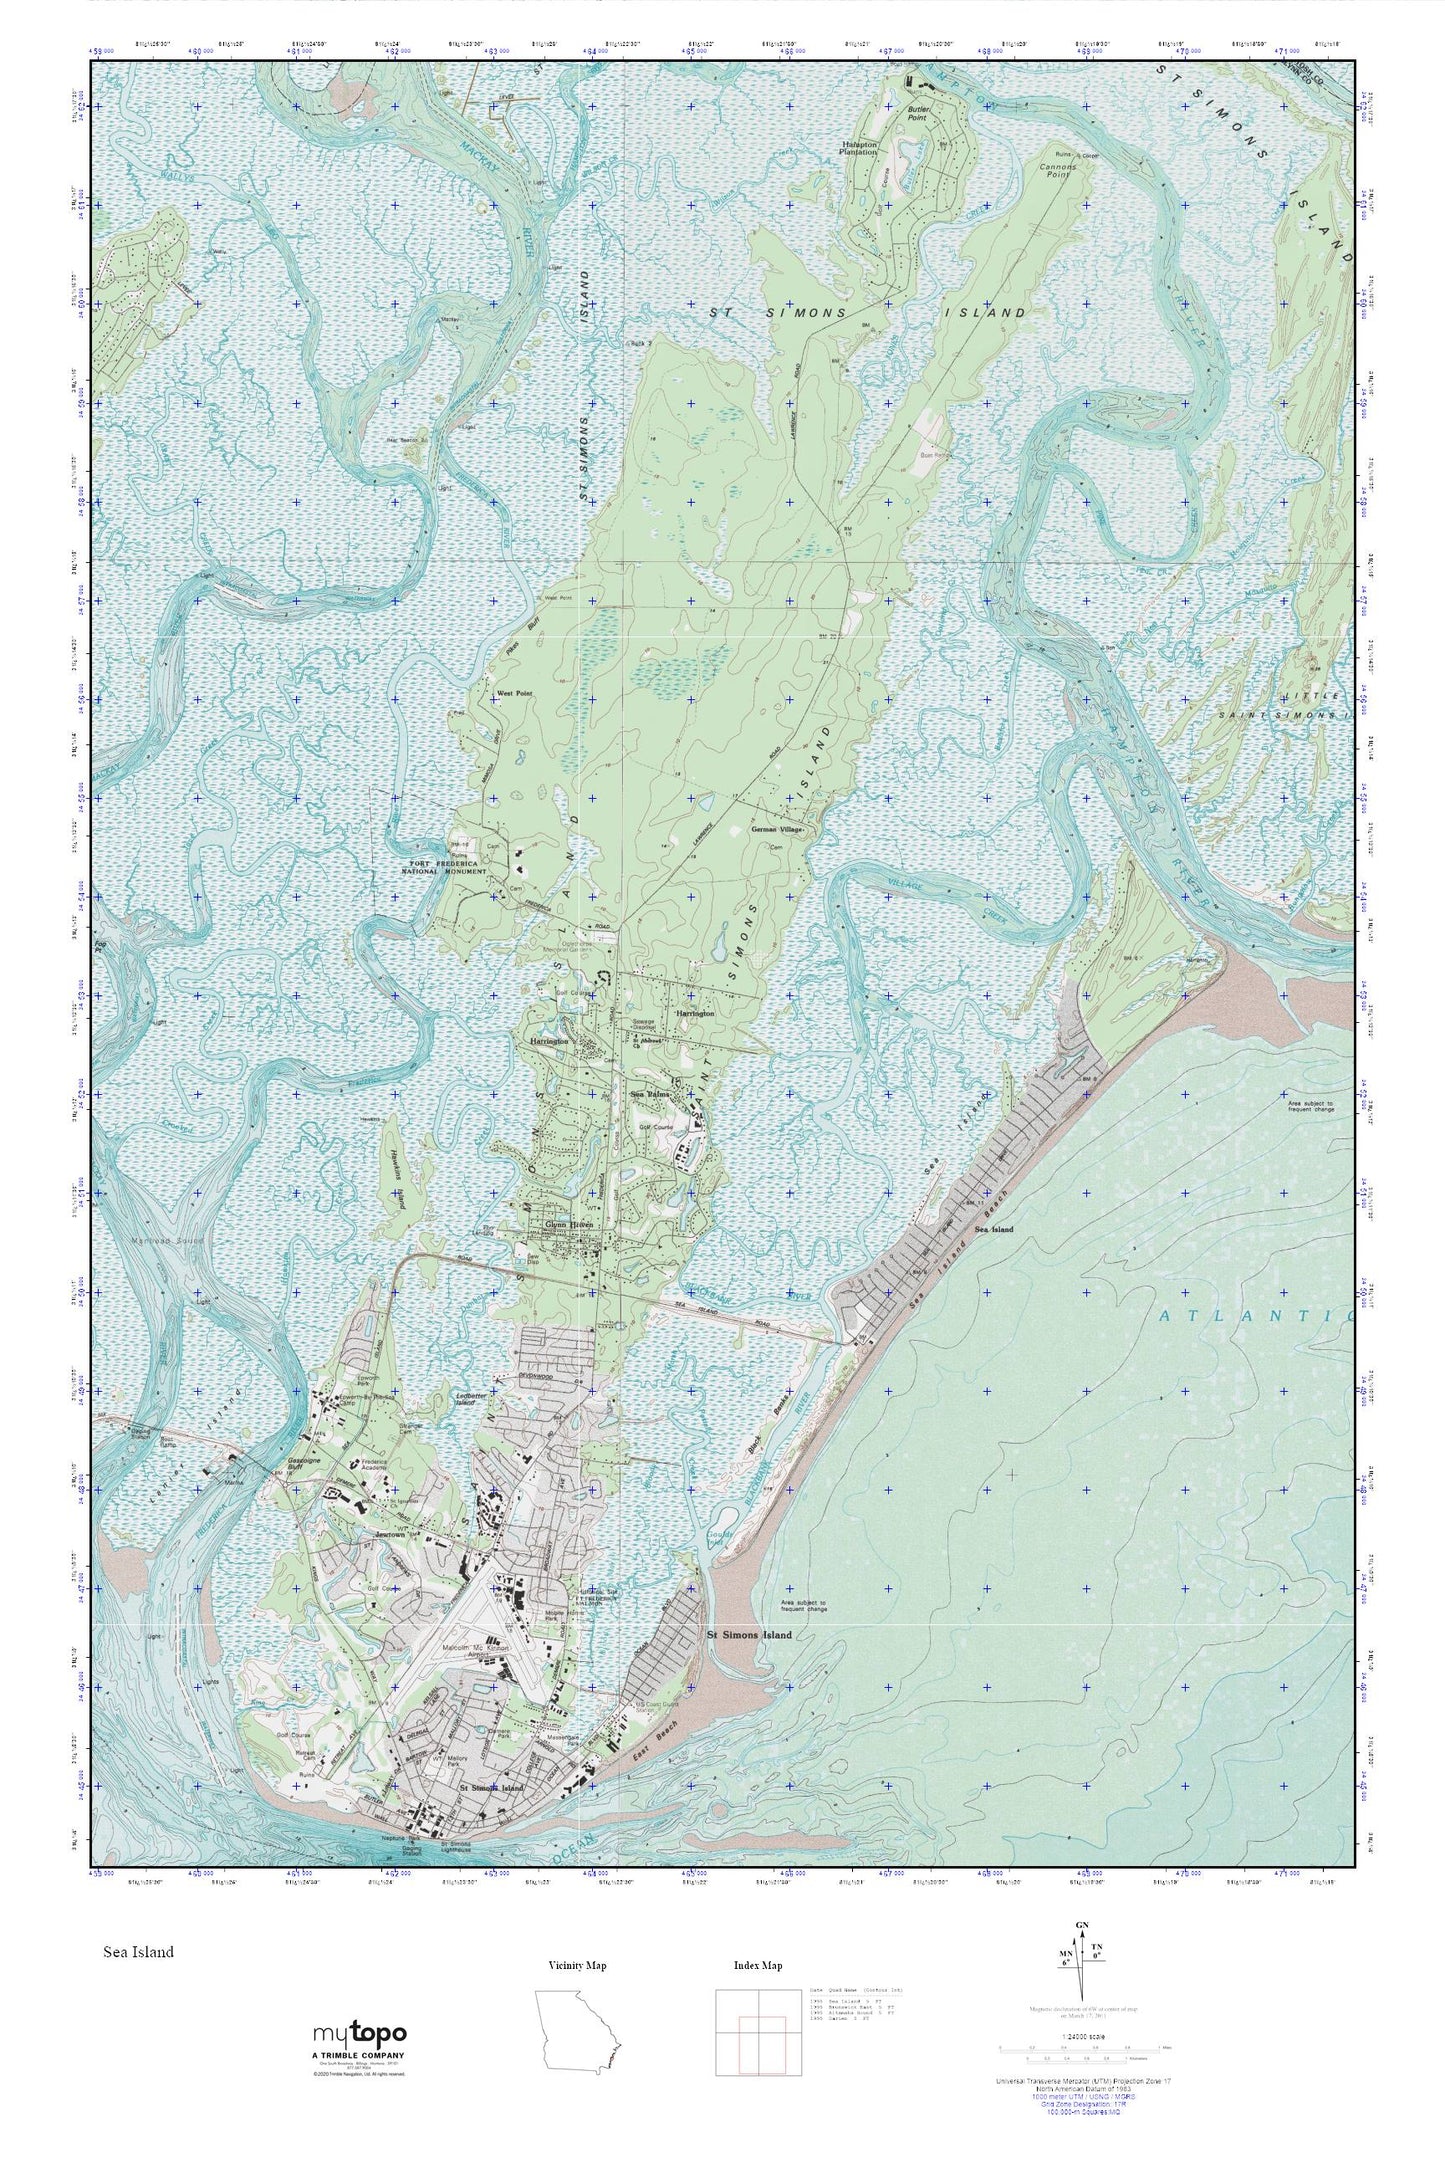 St Simons Island MyTopo Explorer Series Map Image